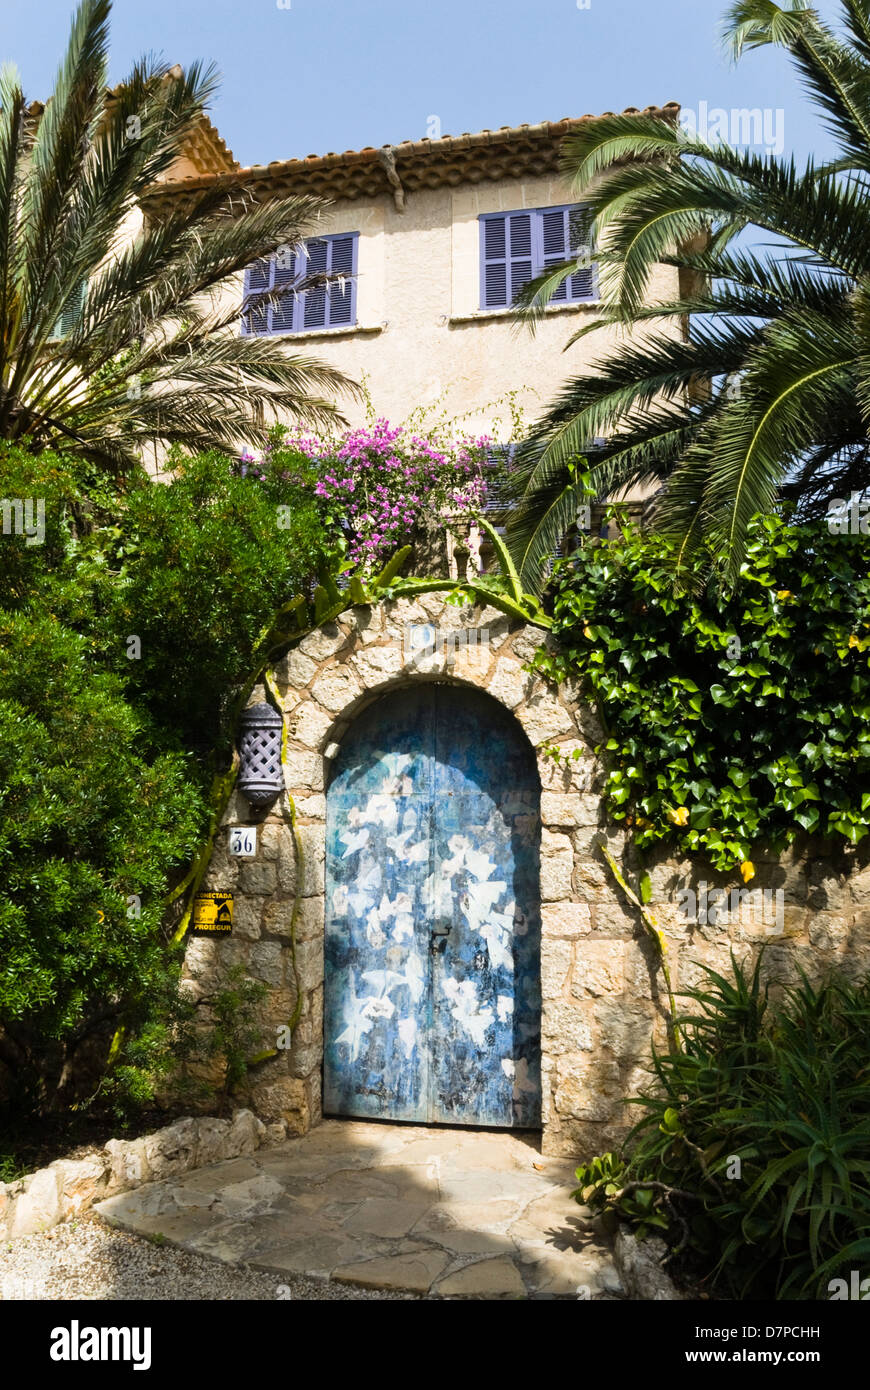 Bellissima casa di campagna a Maiorca, Pollenca, Spagna, schoenes Landhaus auf Mallorca, Pollenca, Spanien Foto Stock